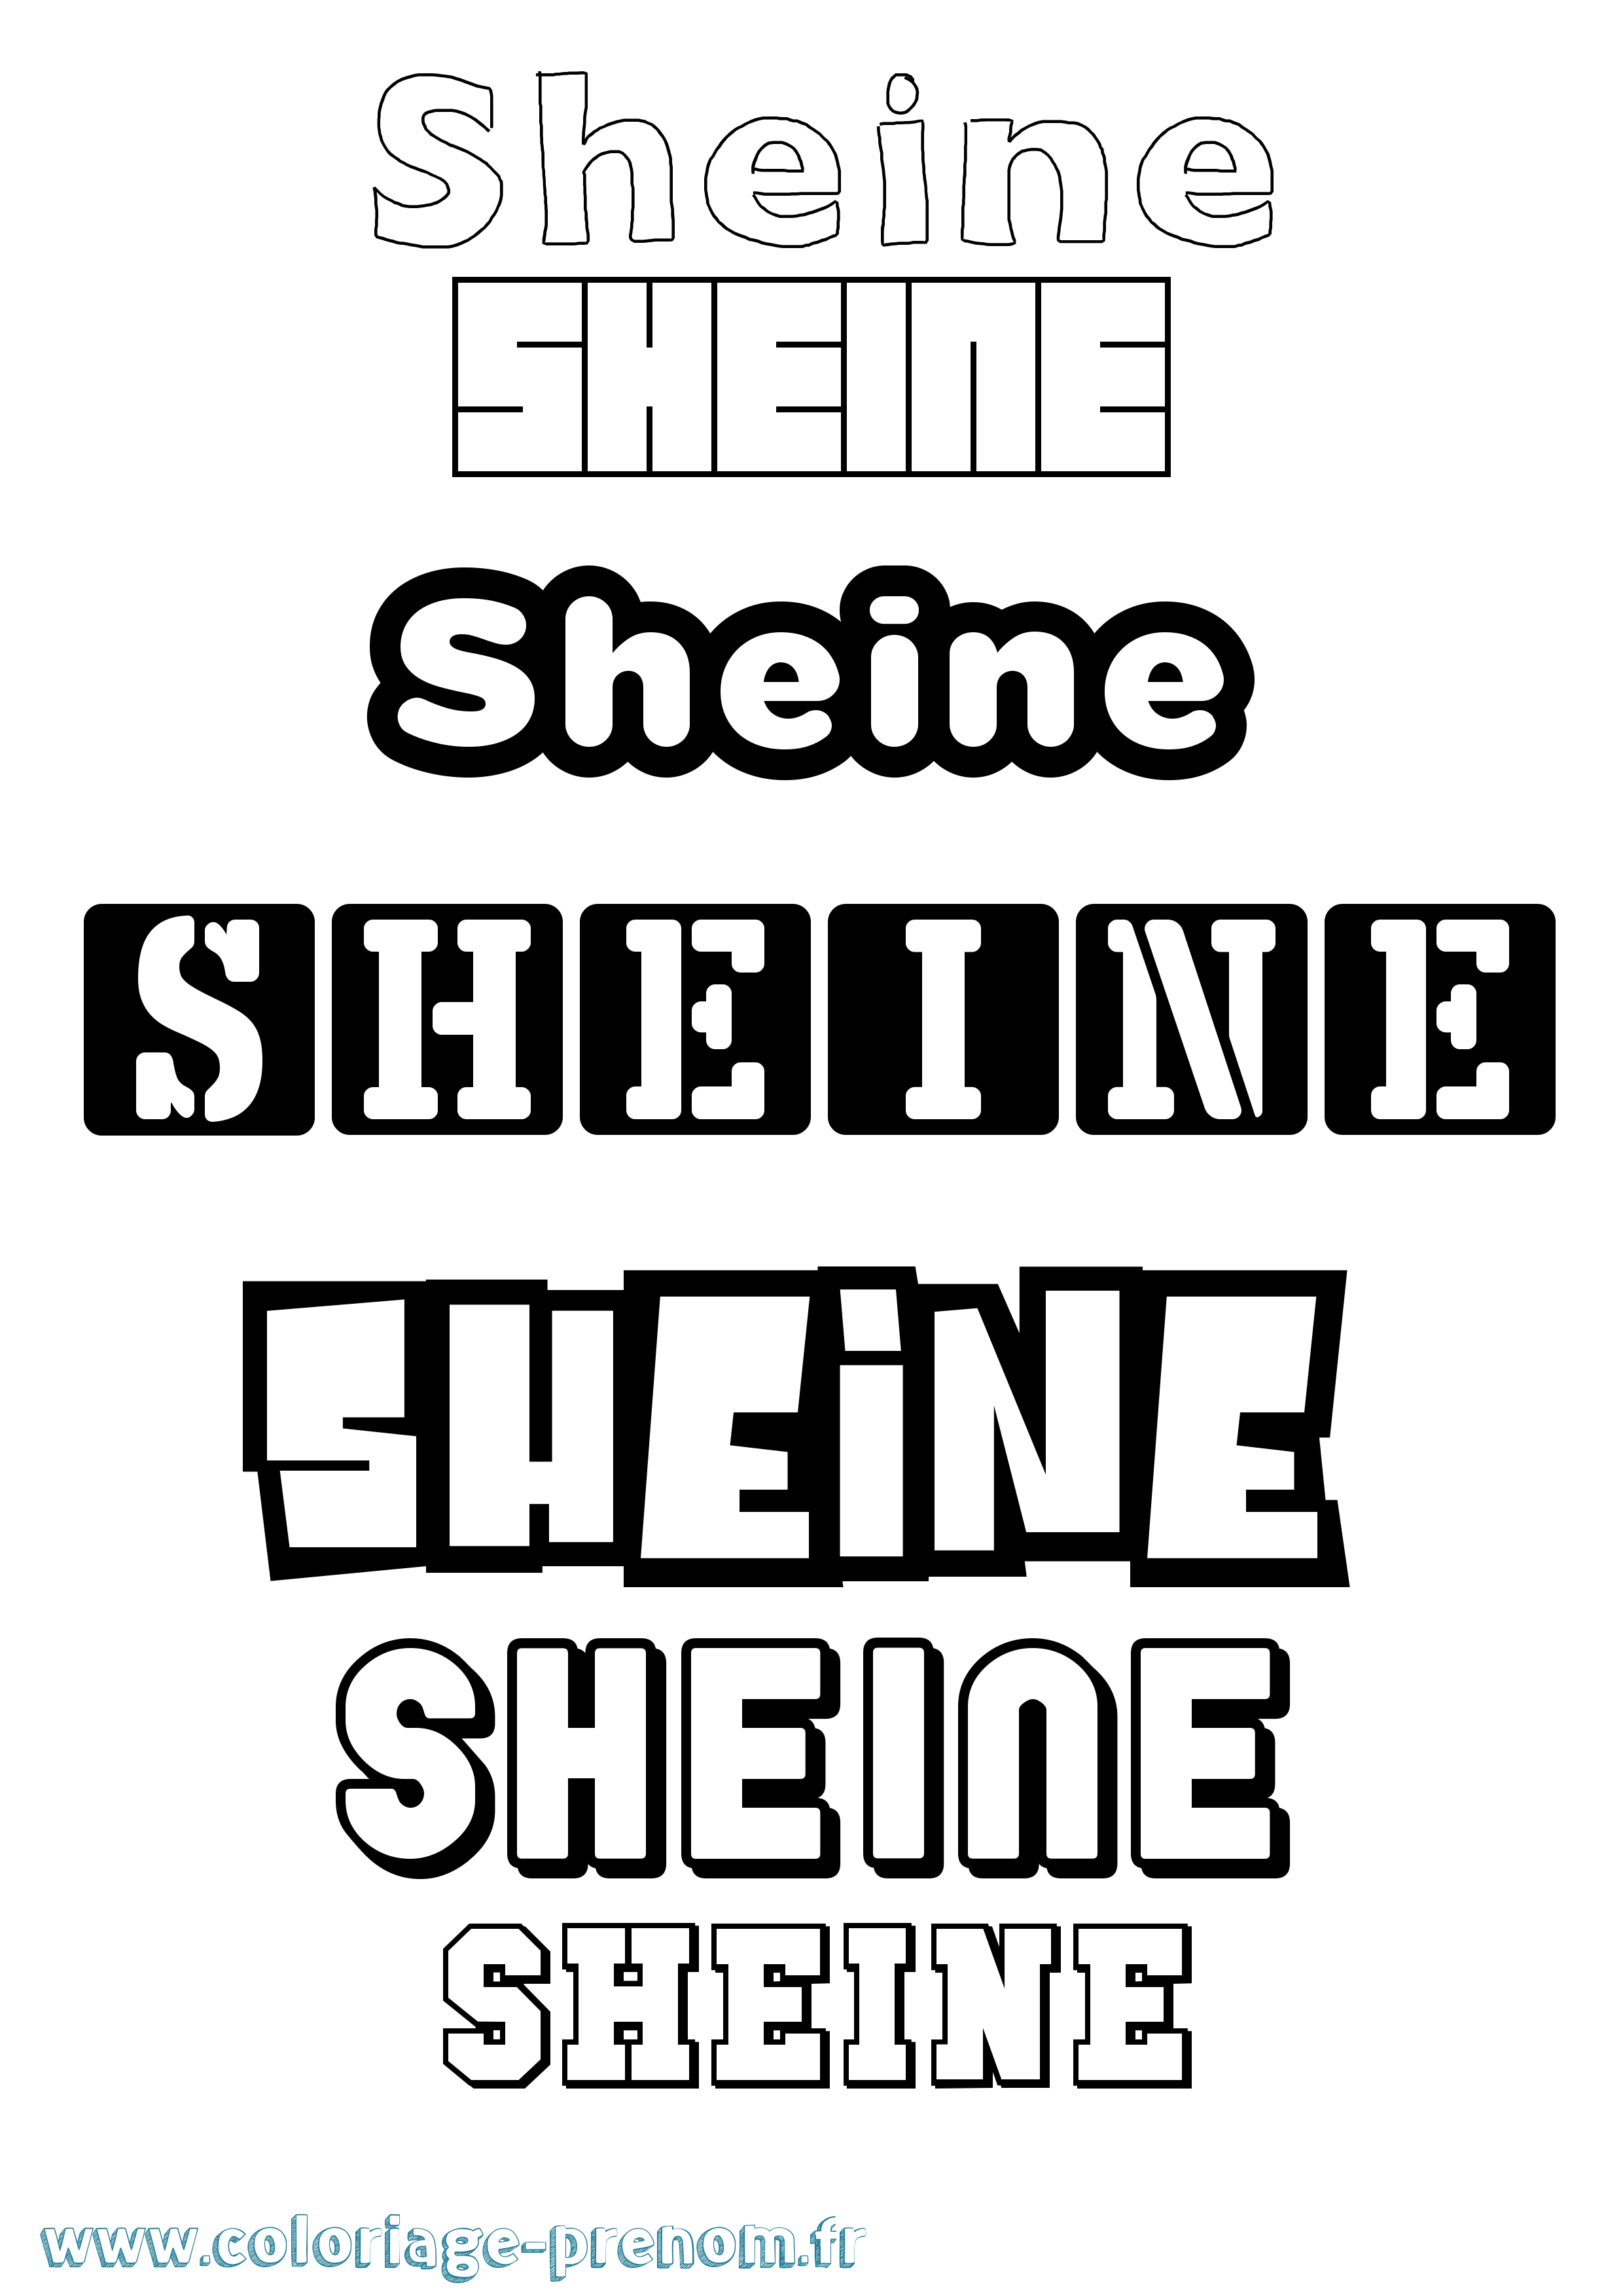 Coloriage prénom Sheine Simple